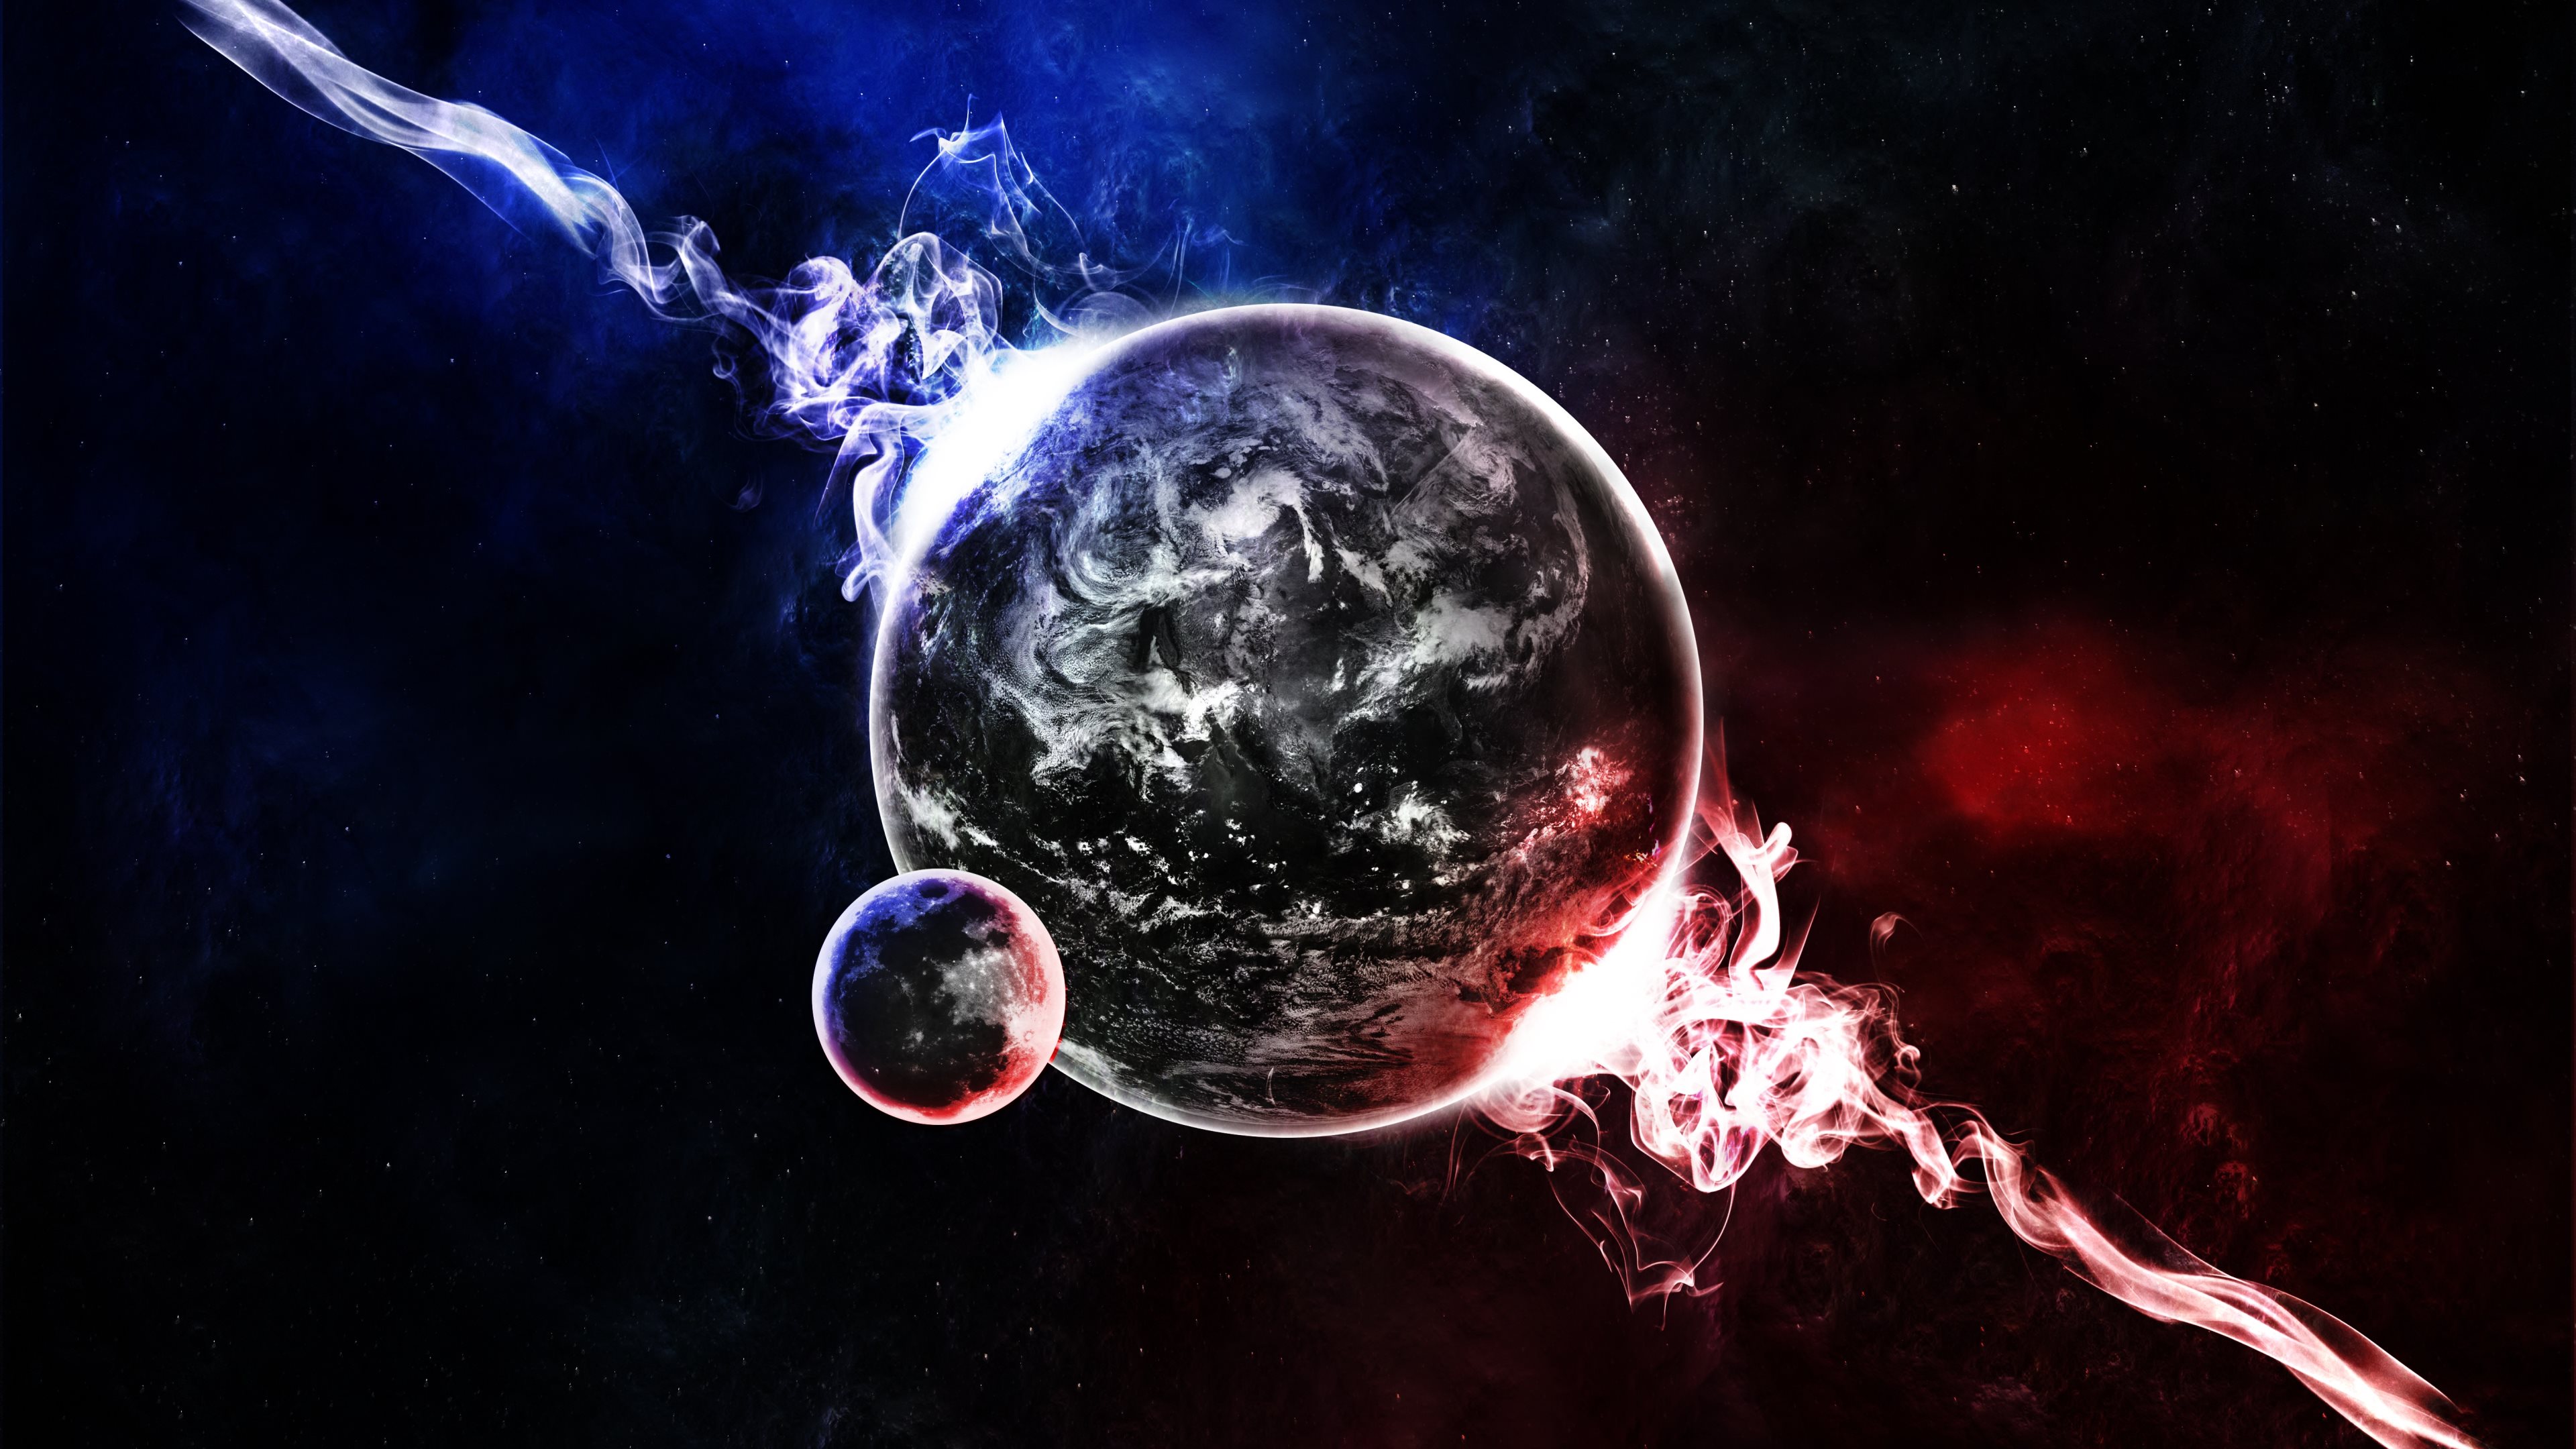 HD desktop wallpaper: Planets, Sci Fi download free picture #658905